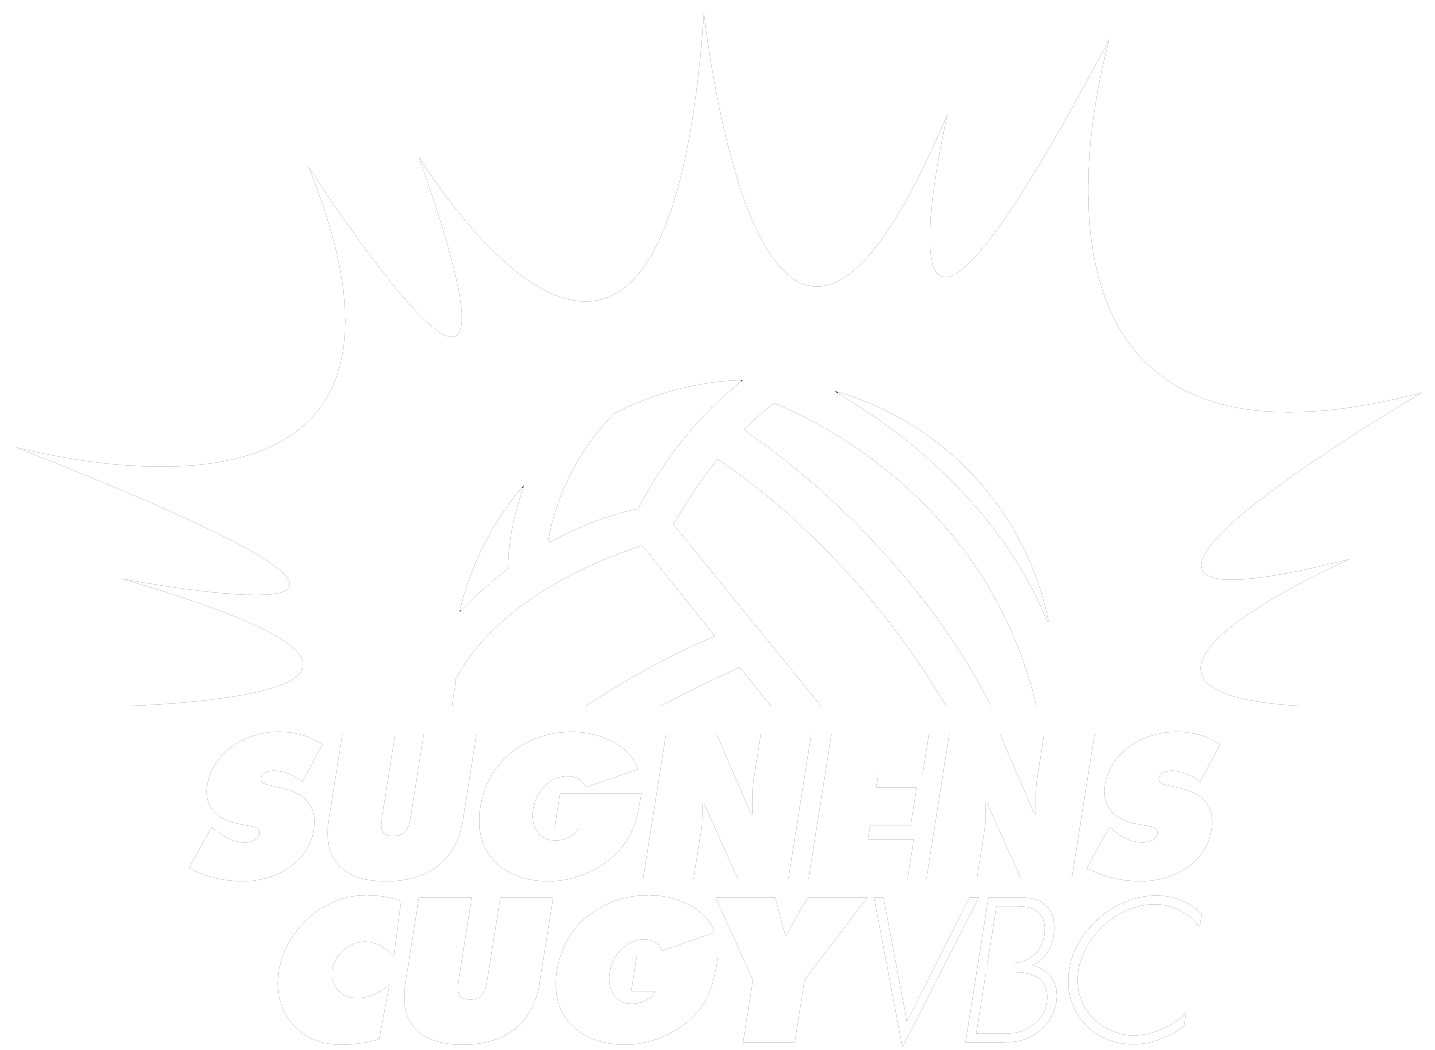 VBC Sugnens - Cugy